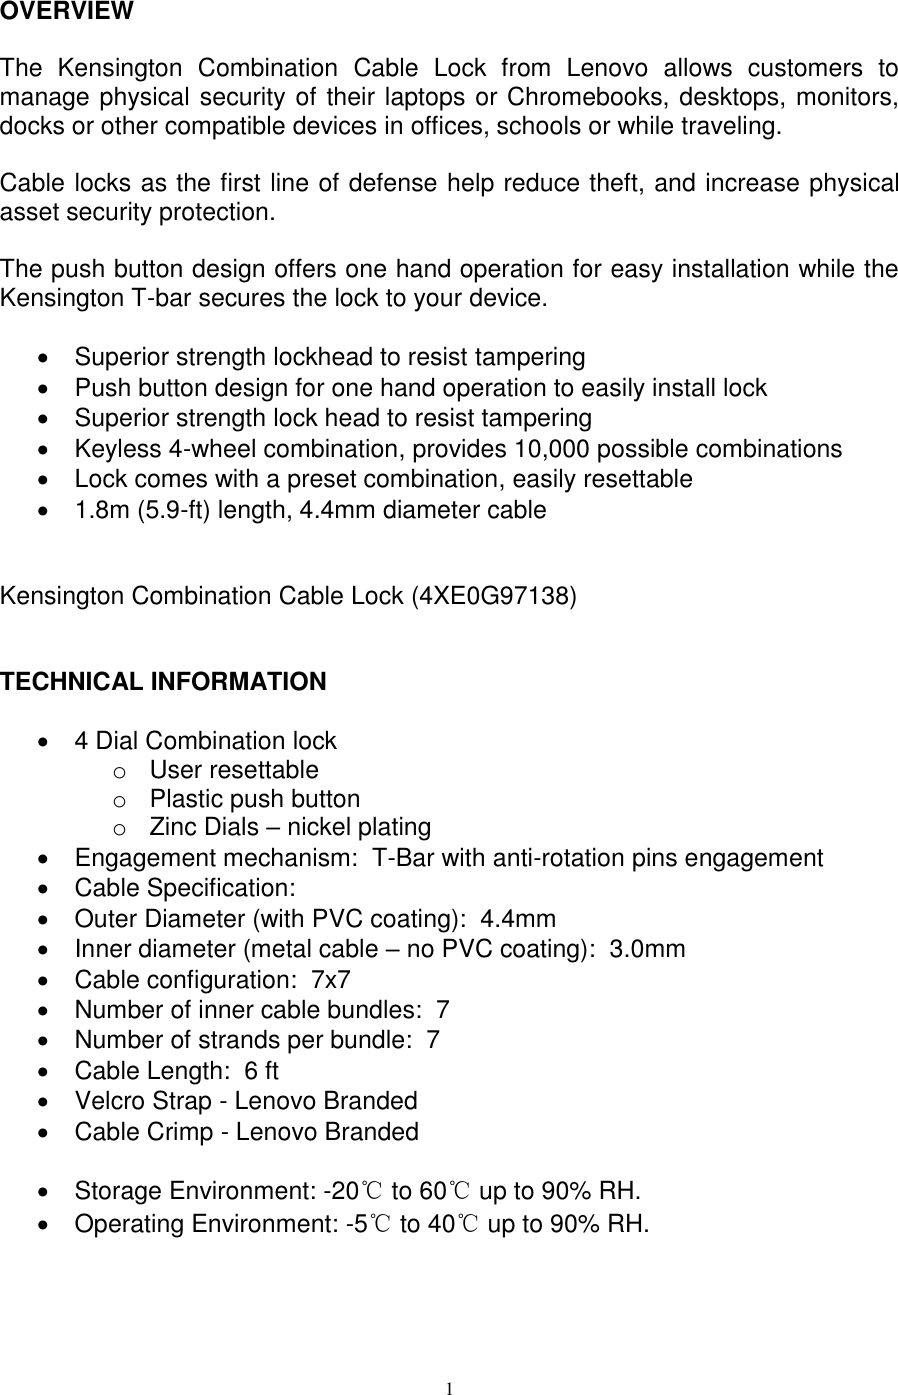 Page 1 of 2 - Lenovo Kensington Comb Cable Lock 4Xe0G97138 User Manual G50-80 Laptop (Lenovo) - Type 20371